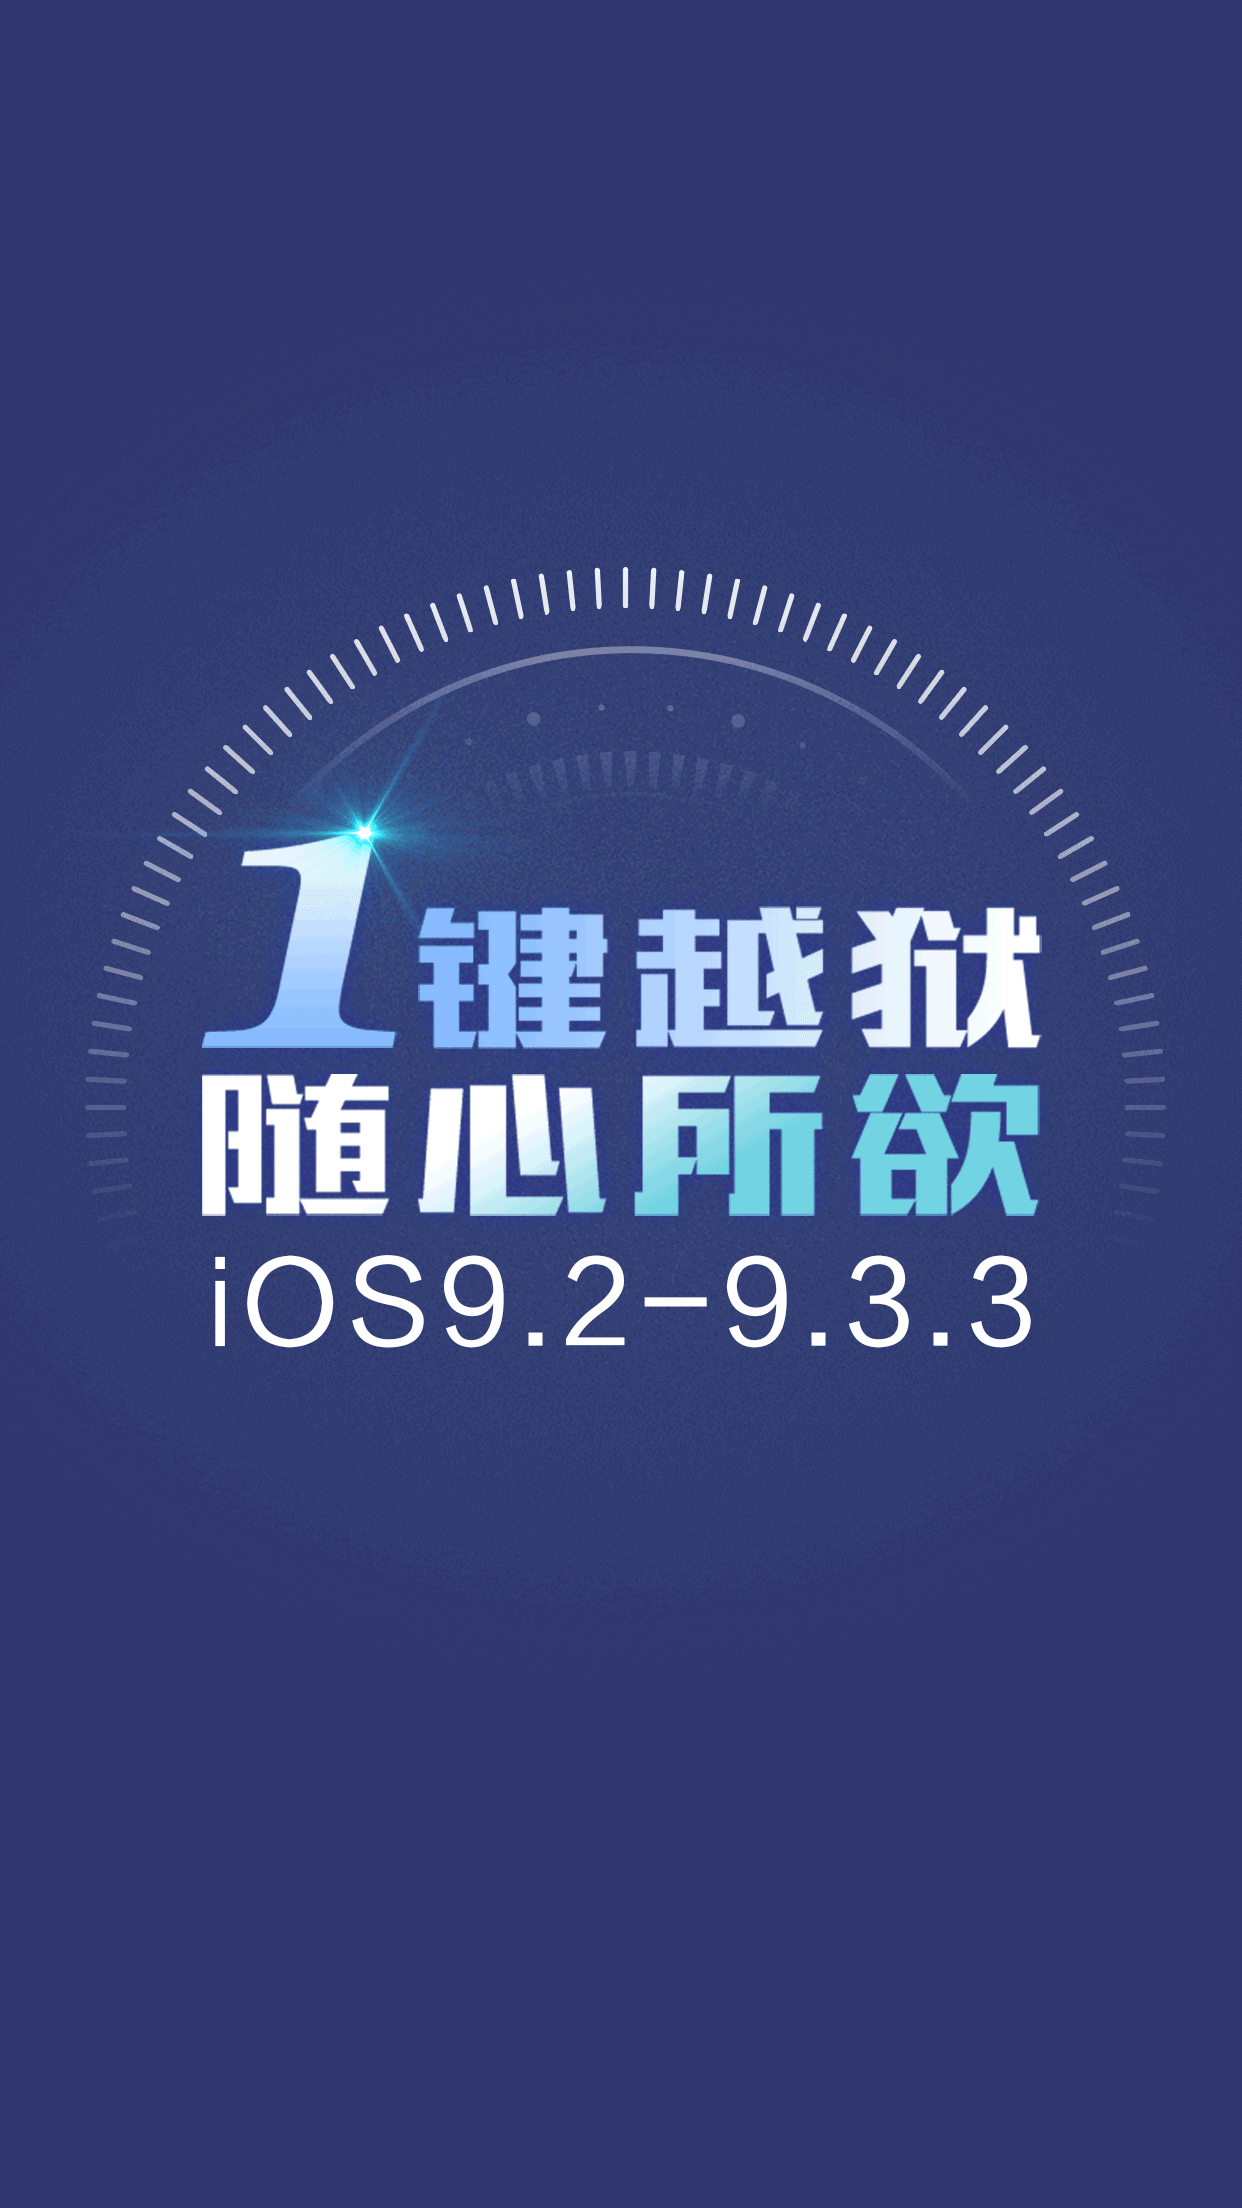 iphone 4s ios 9.2.1 pangu jailbreak download